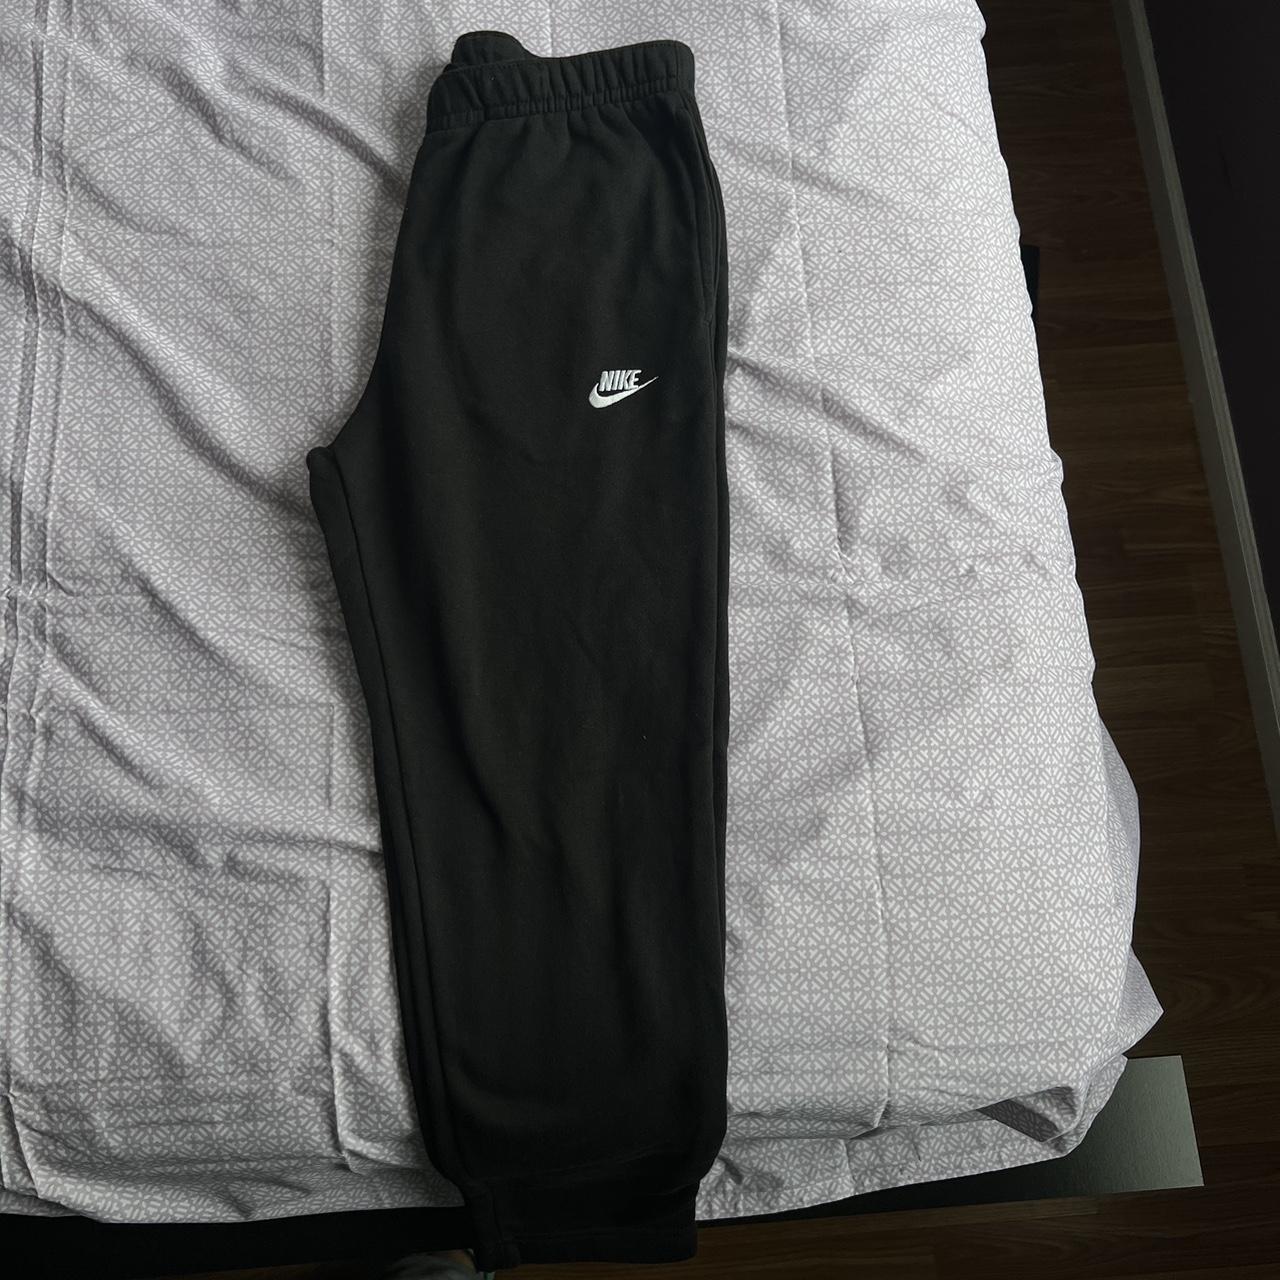 Grey Nike sweatpants, size medium - Depop